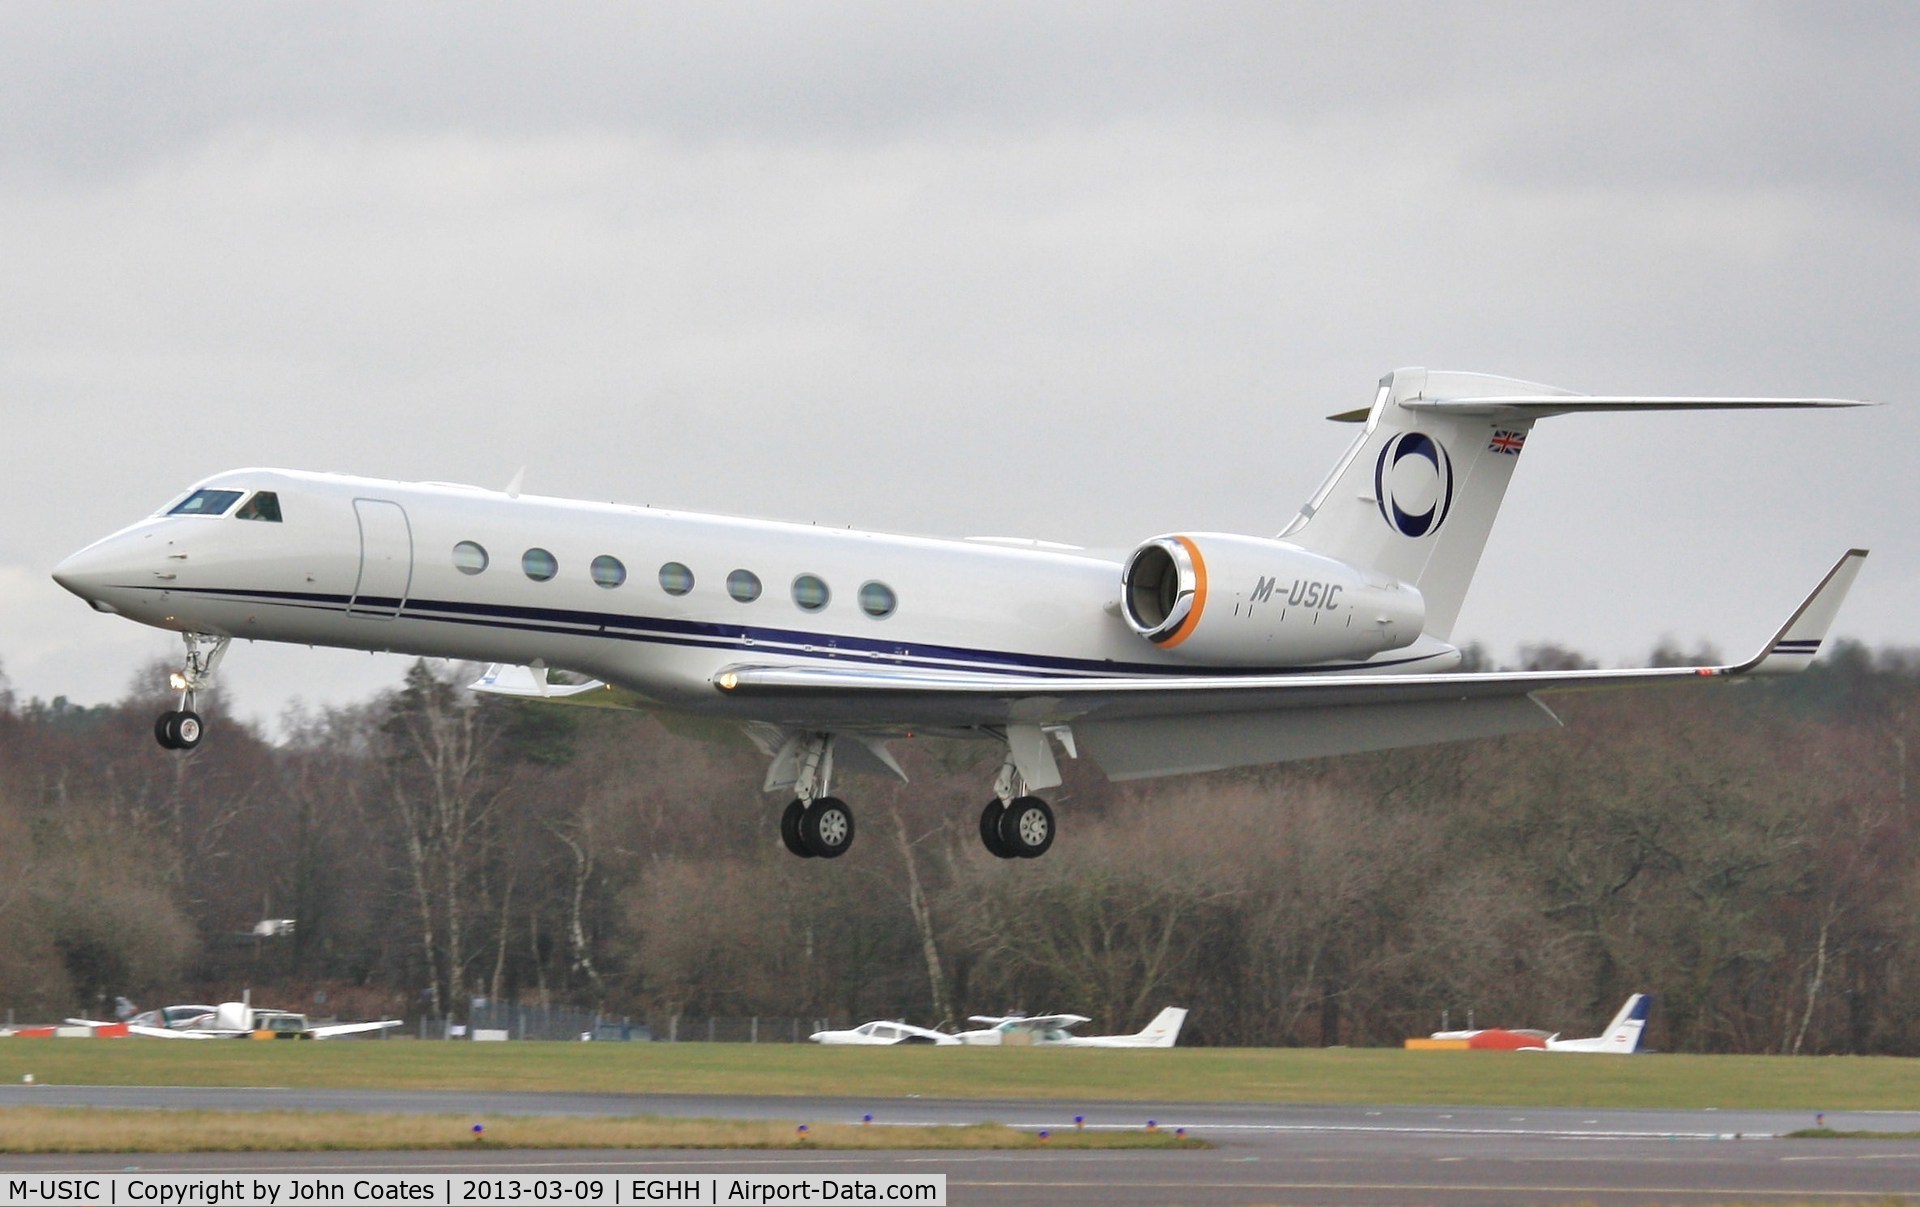 M-USIC, 2012 Gulfstream Aerospace V-SP G550 C/N 5394, Recent new resident returns